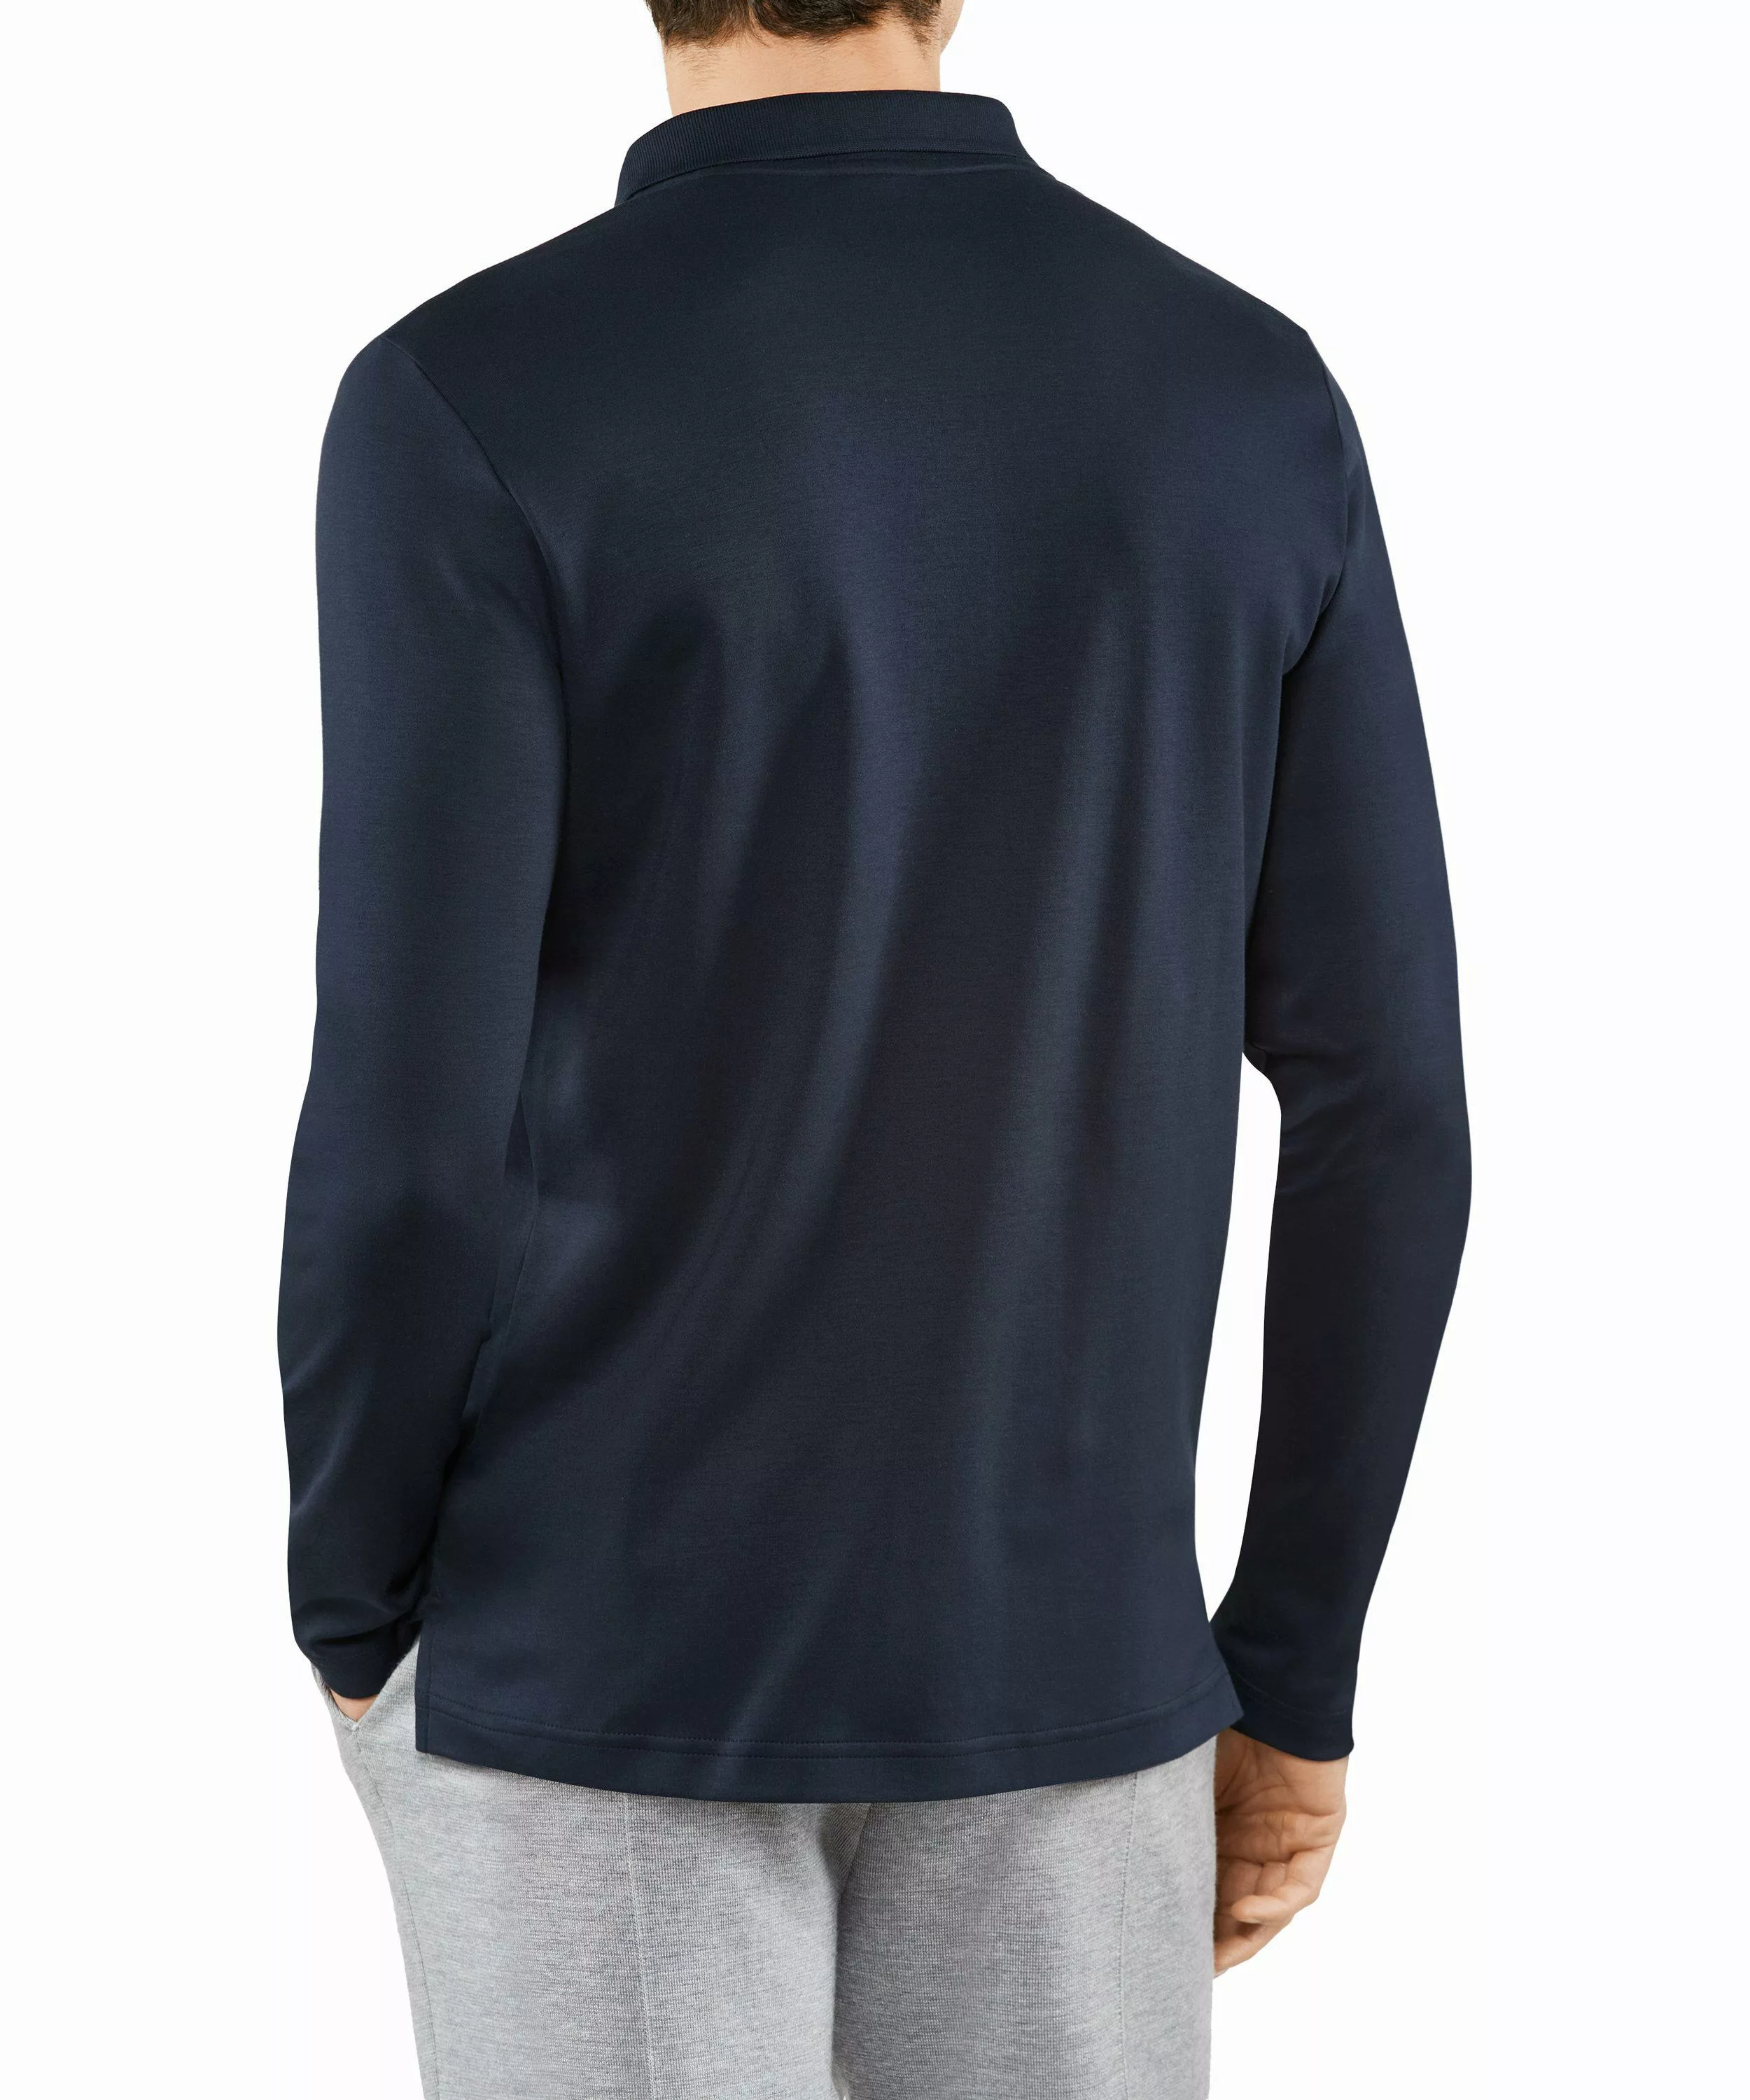 FALKE Polo Shirt Polo, Herren, XL, Blau, Uni, Baumwolle, 62102-611605 günstig online kaufen